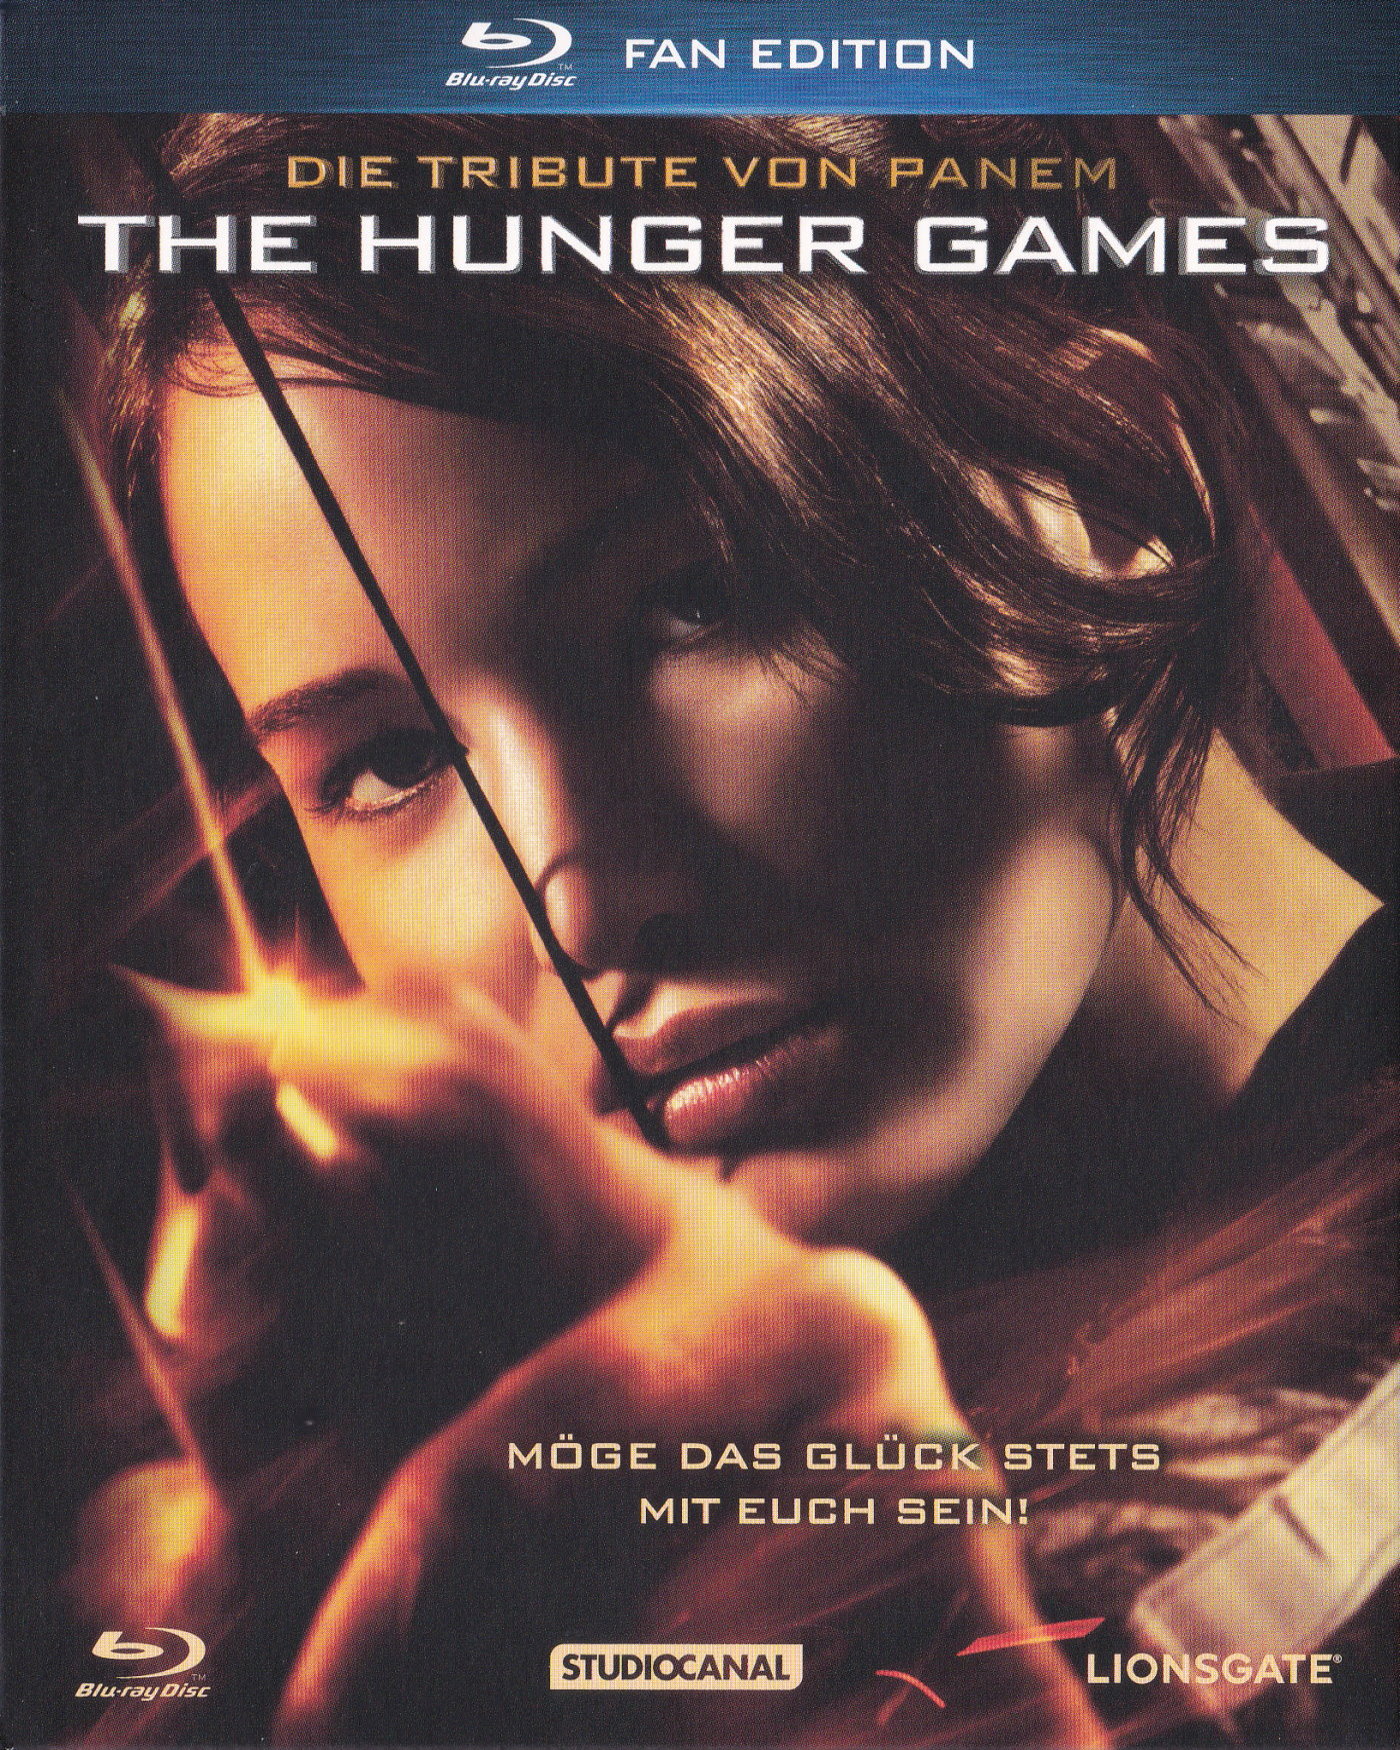 Cover - Die Tribute von Panem - The Hunger Games.jpg